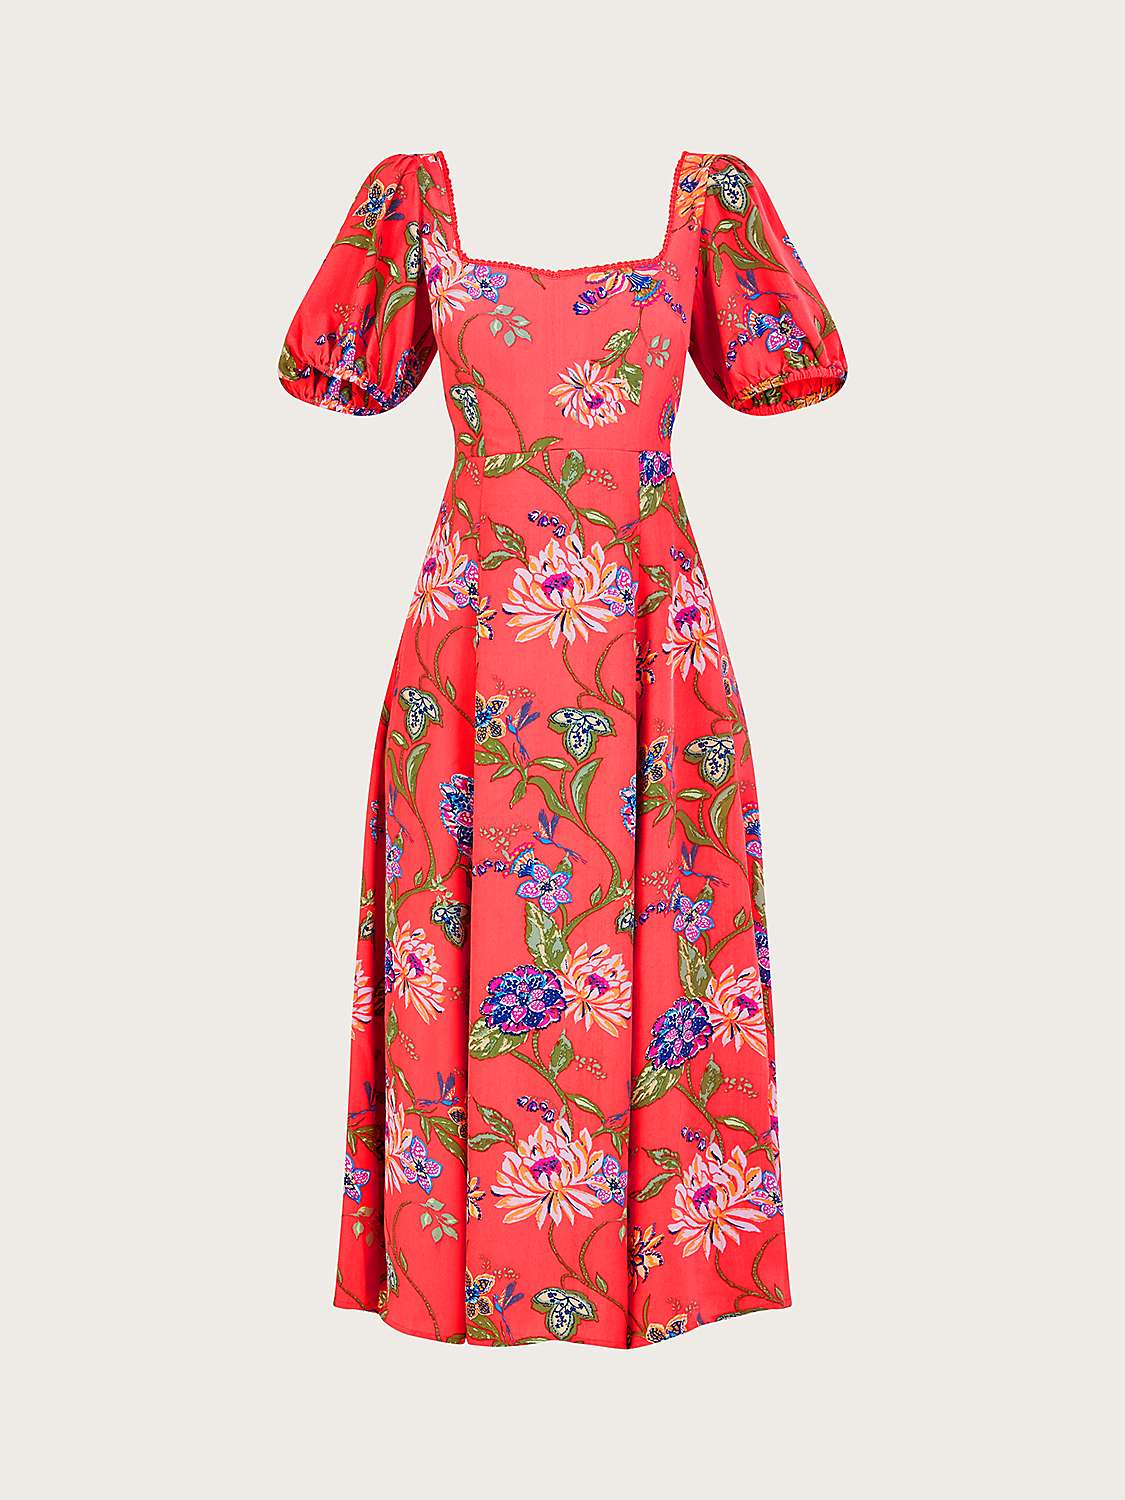 Monsoon Regina Floral Print Tea Dress, Coral/Multi at John Lewis & Partners